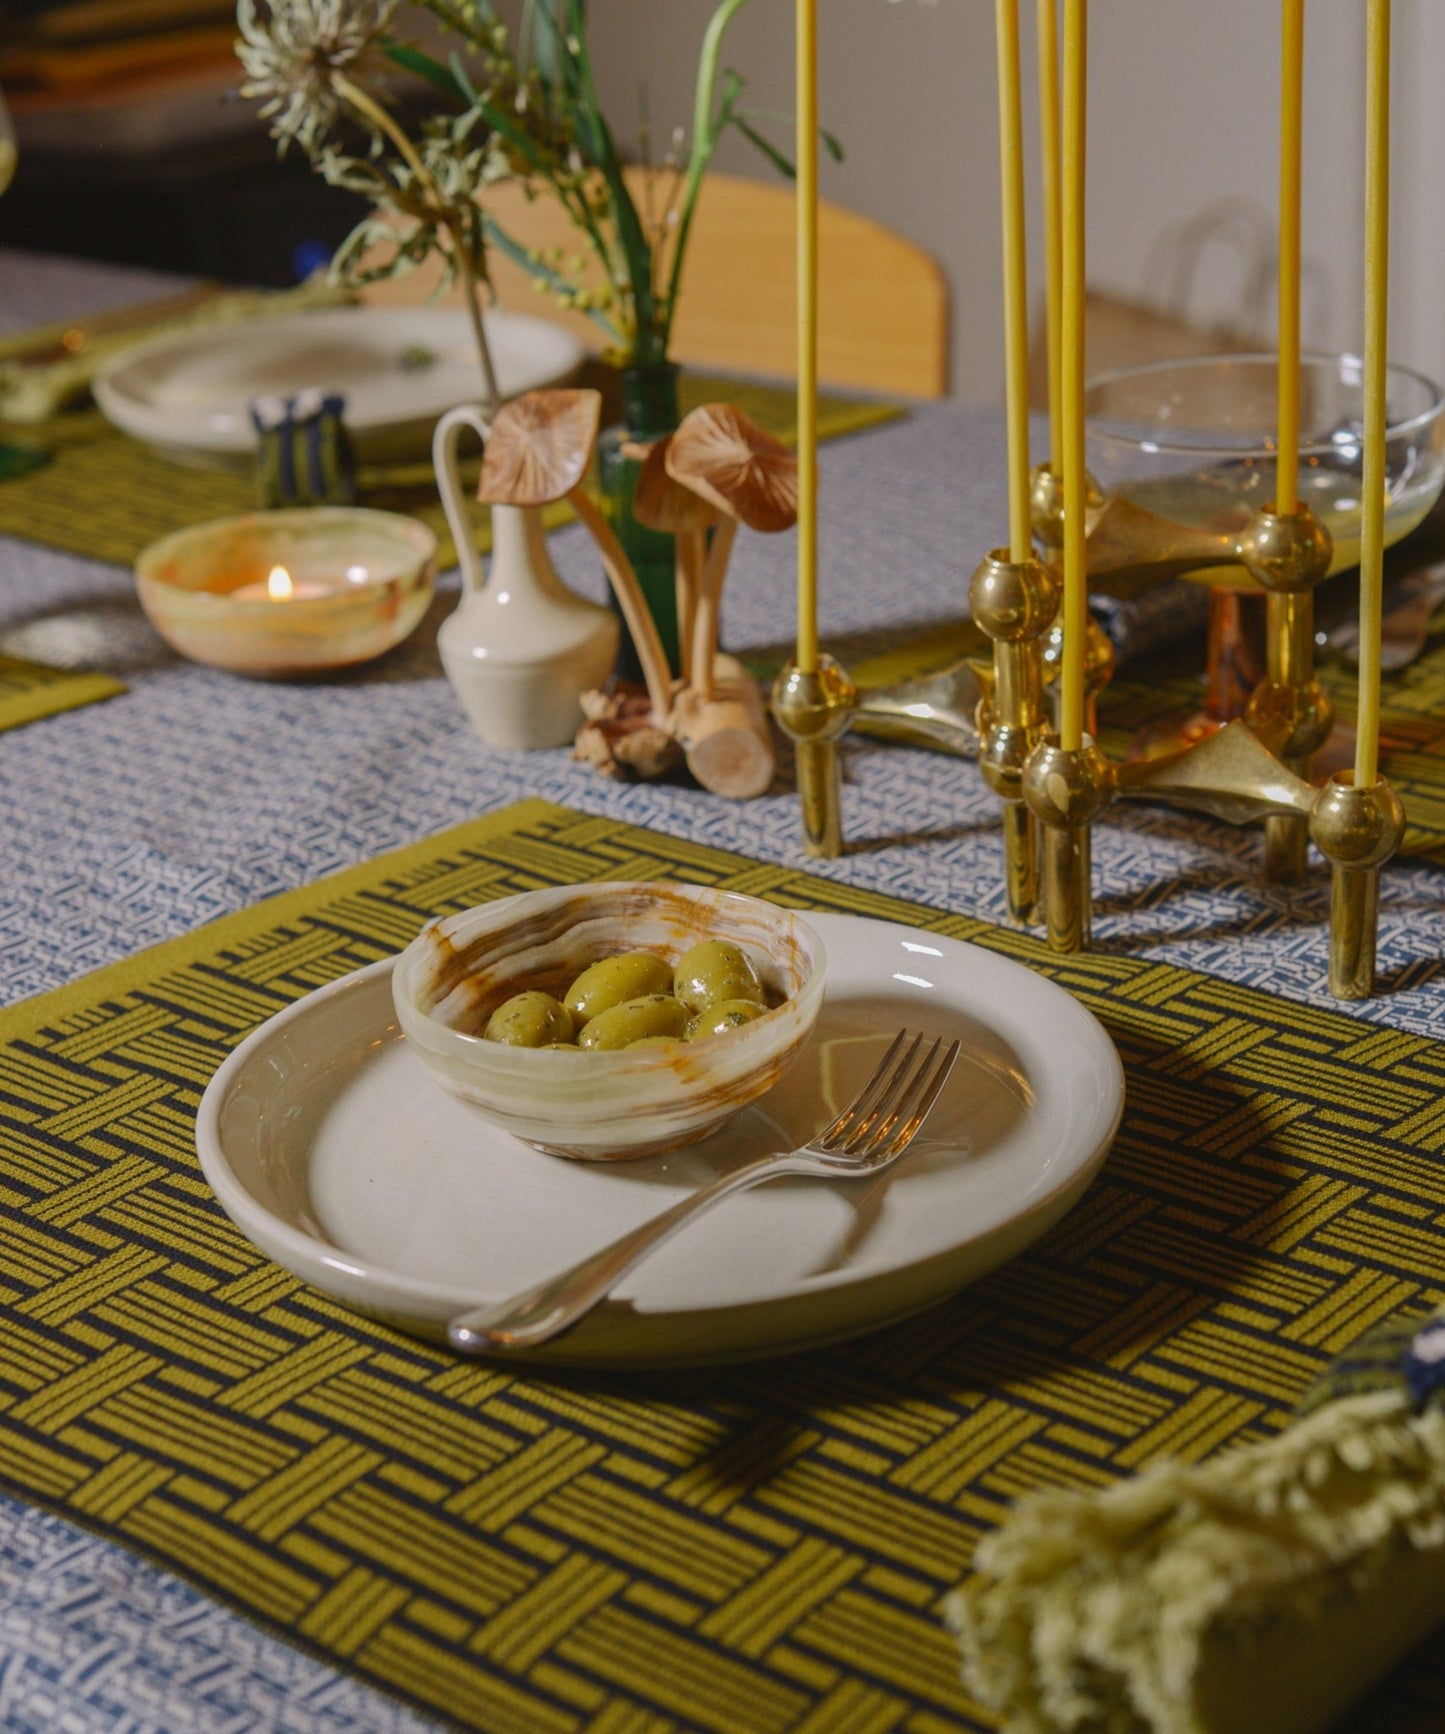 Ambar linen Tablecloth party setting